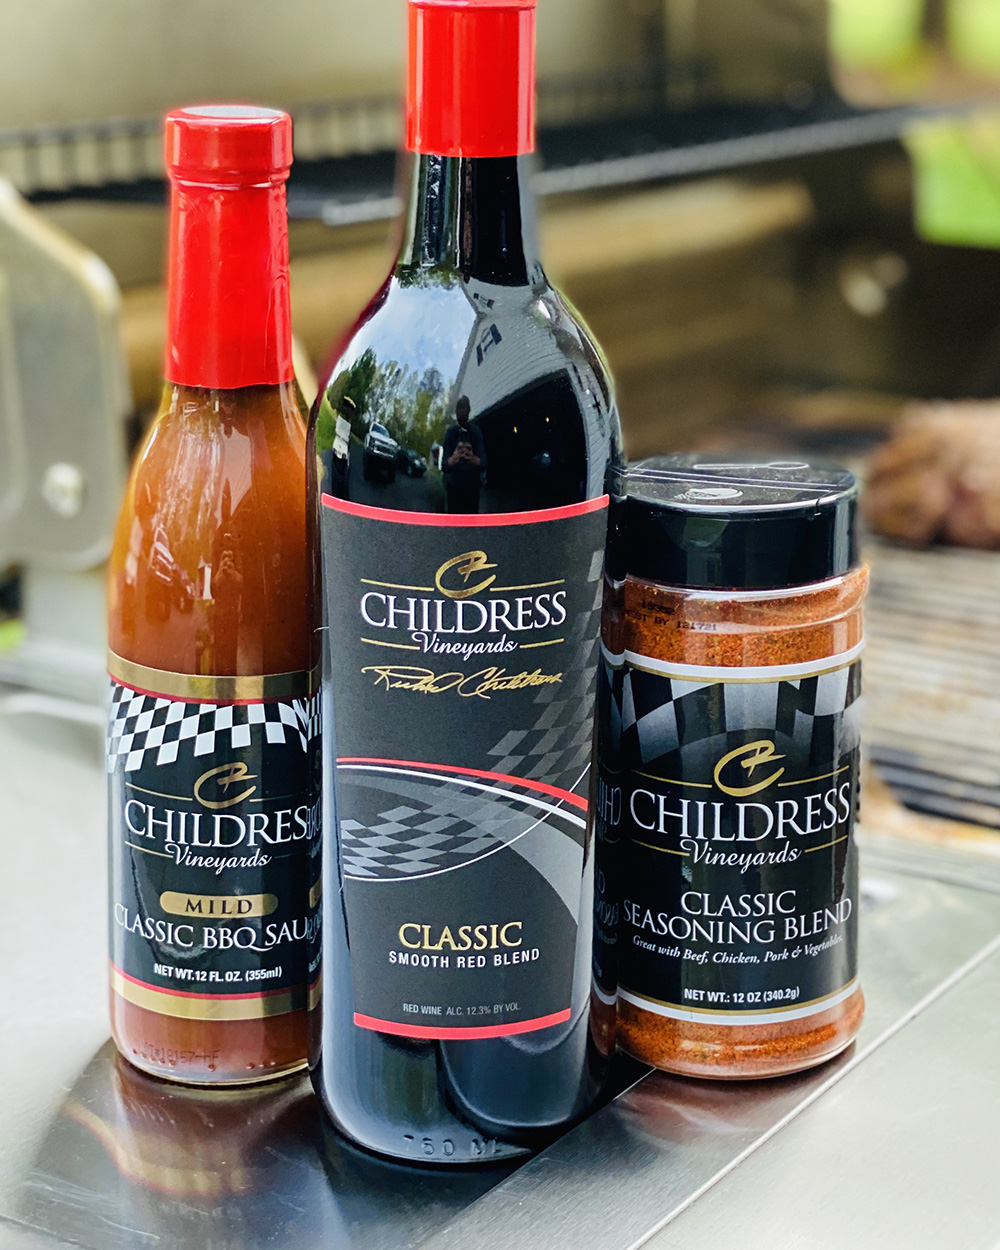 Childress sauces